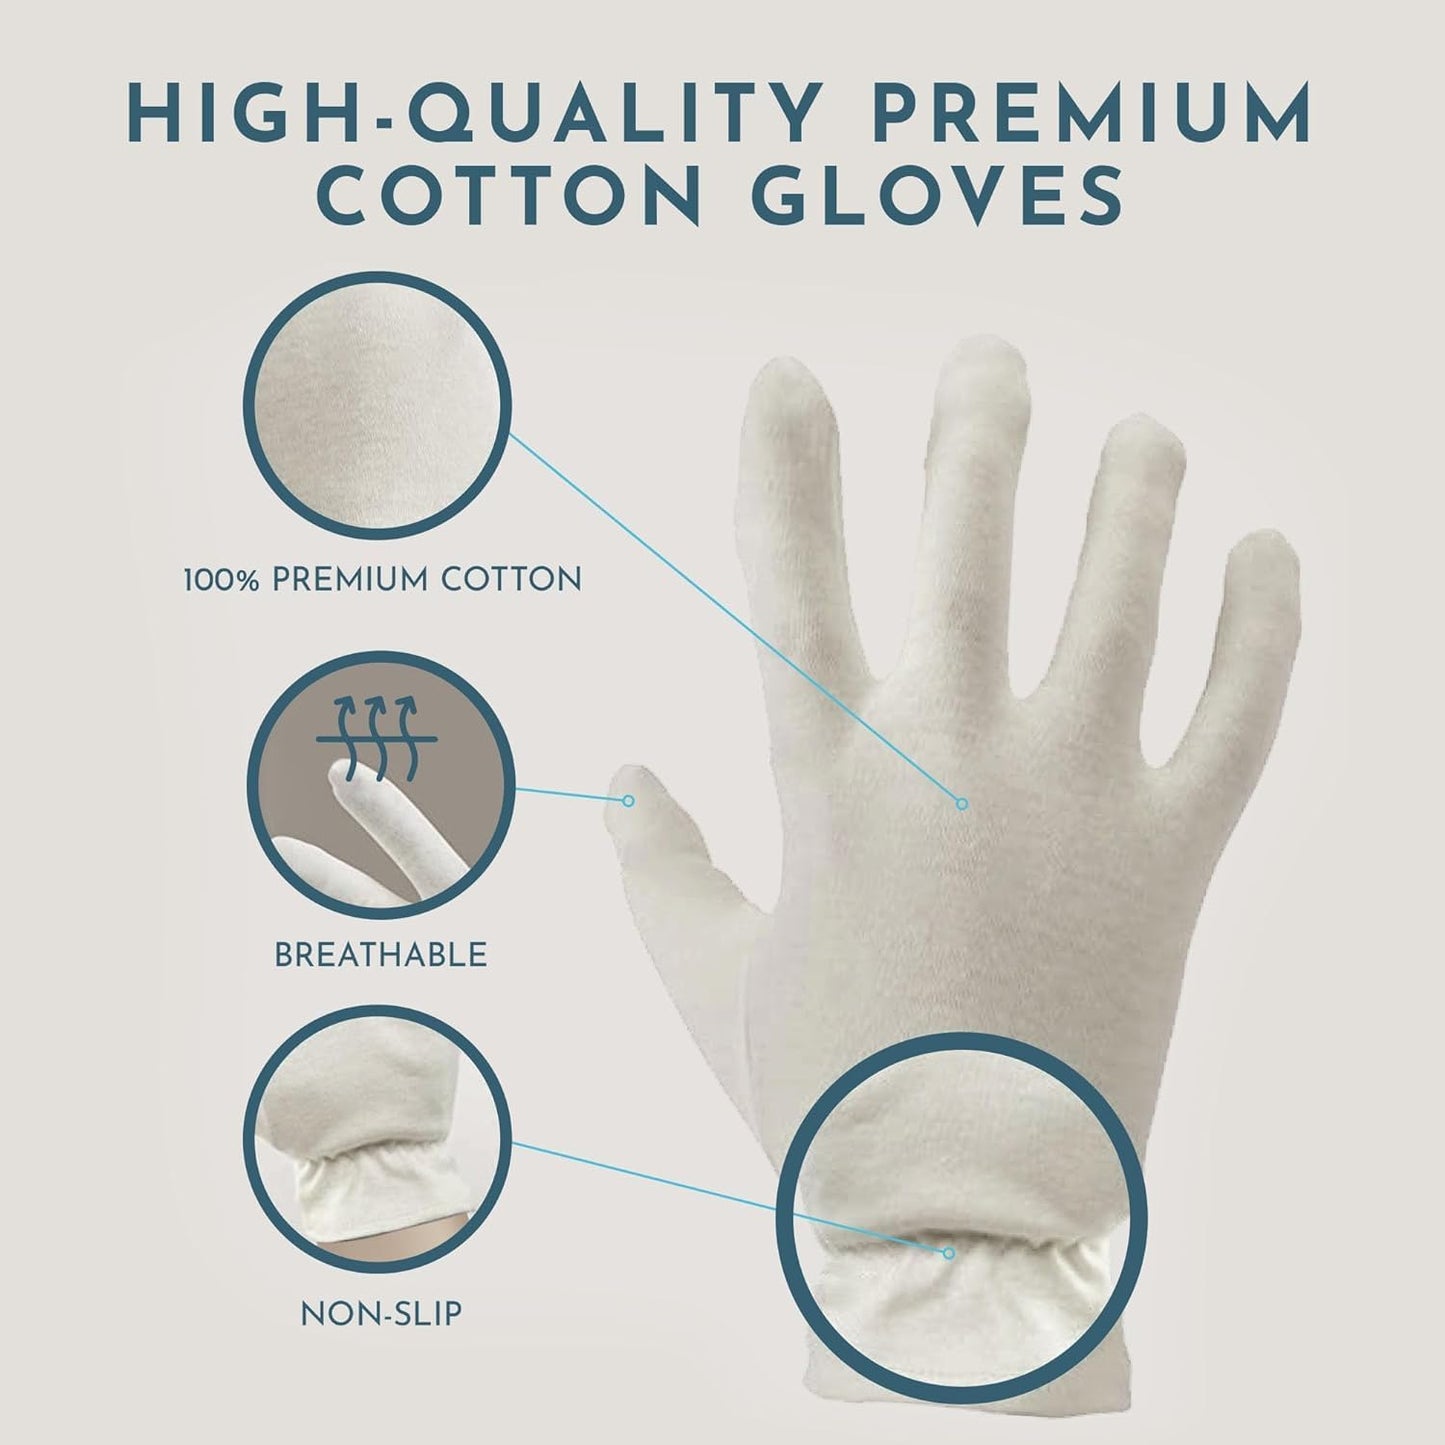 Gaxcoo/Cottonnerie 100% Premium Cotton Moisturizing Gloves 7 pairs